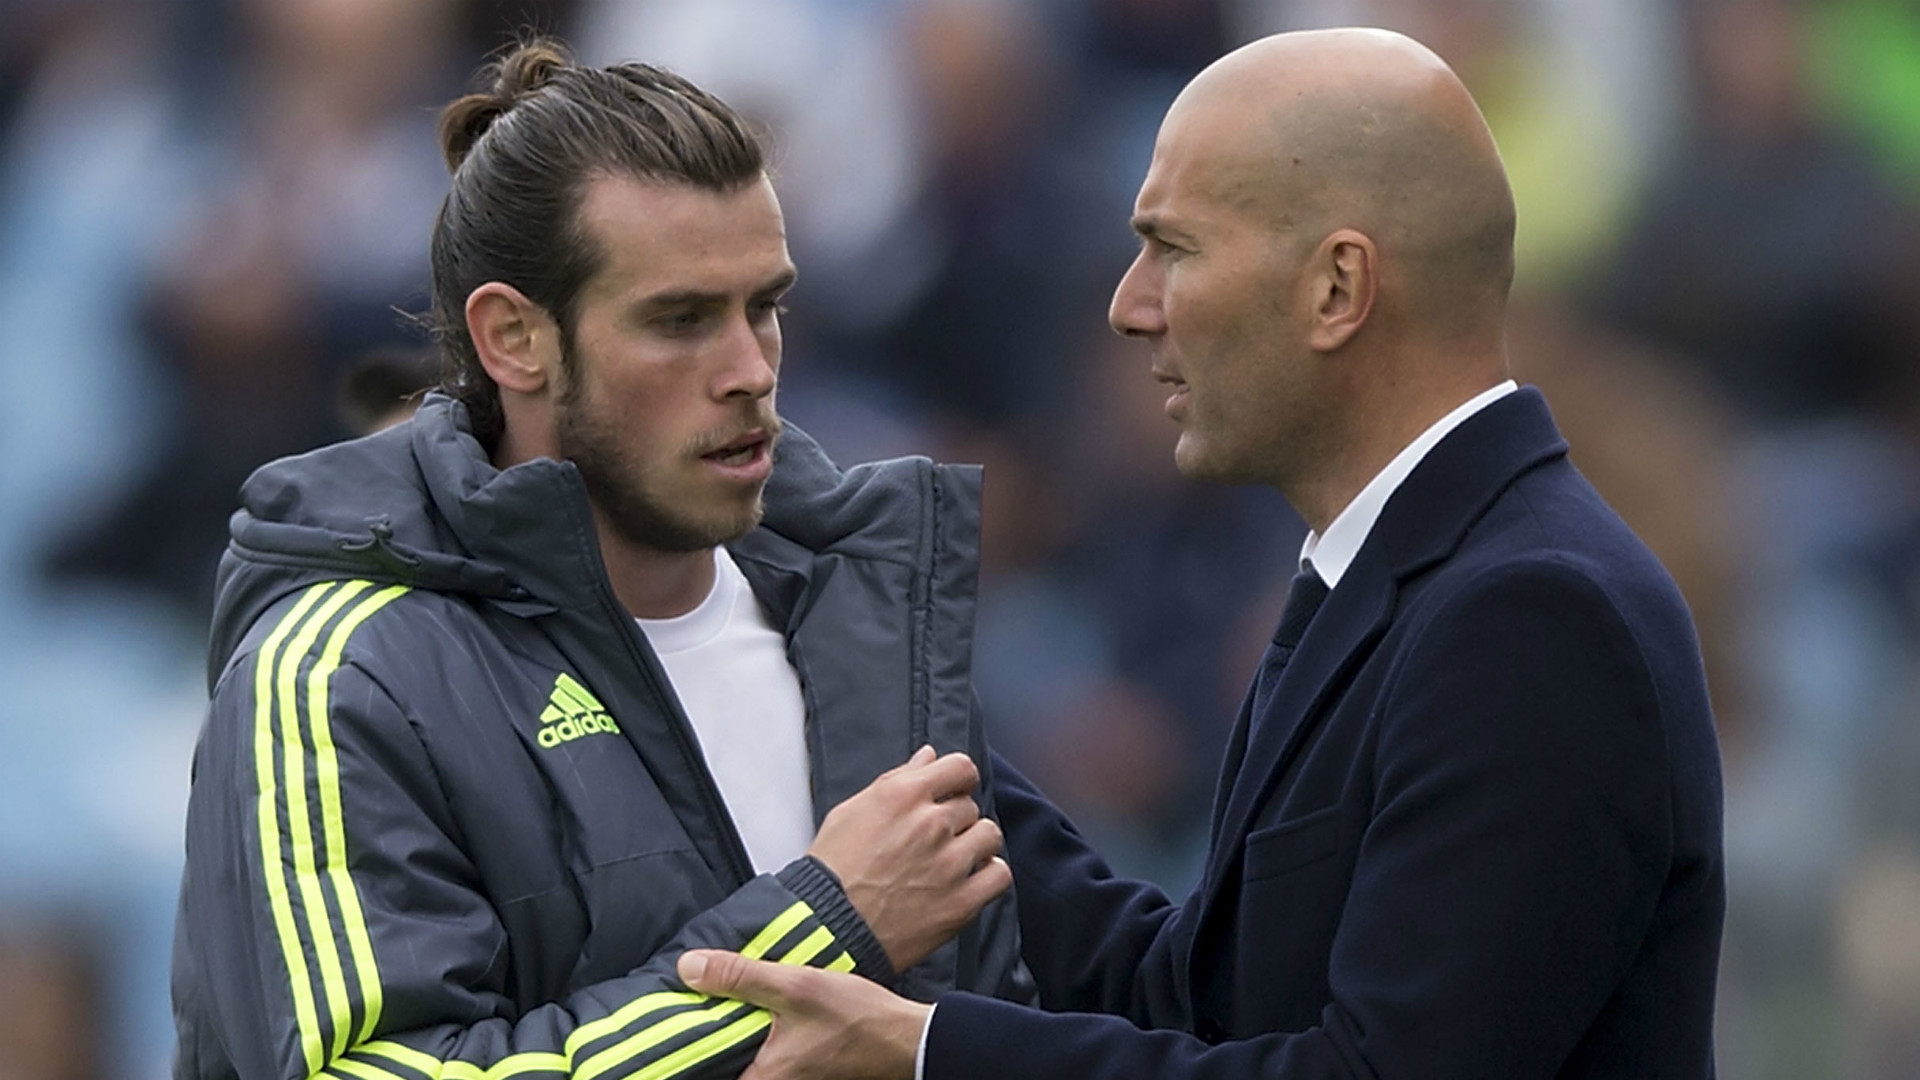 Real Madrid boss Zidane has no problem with Bale's golfing habit